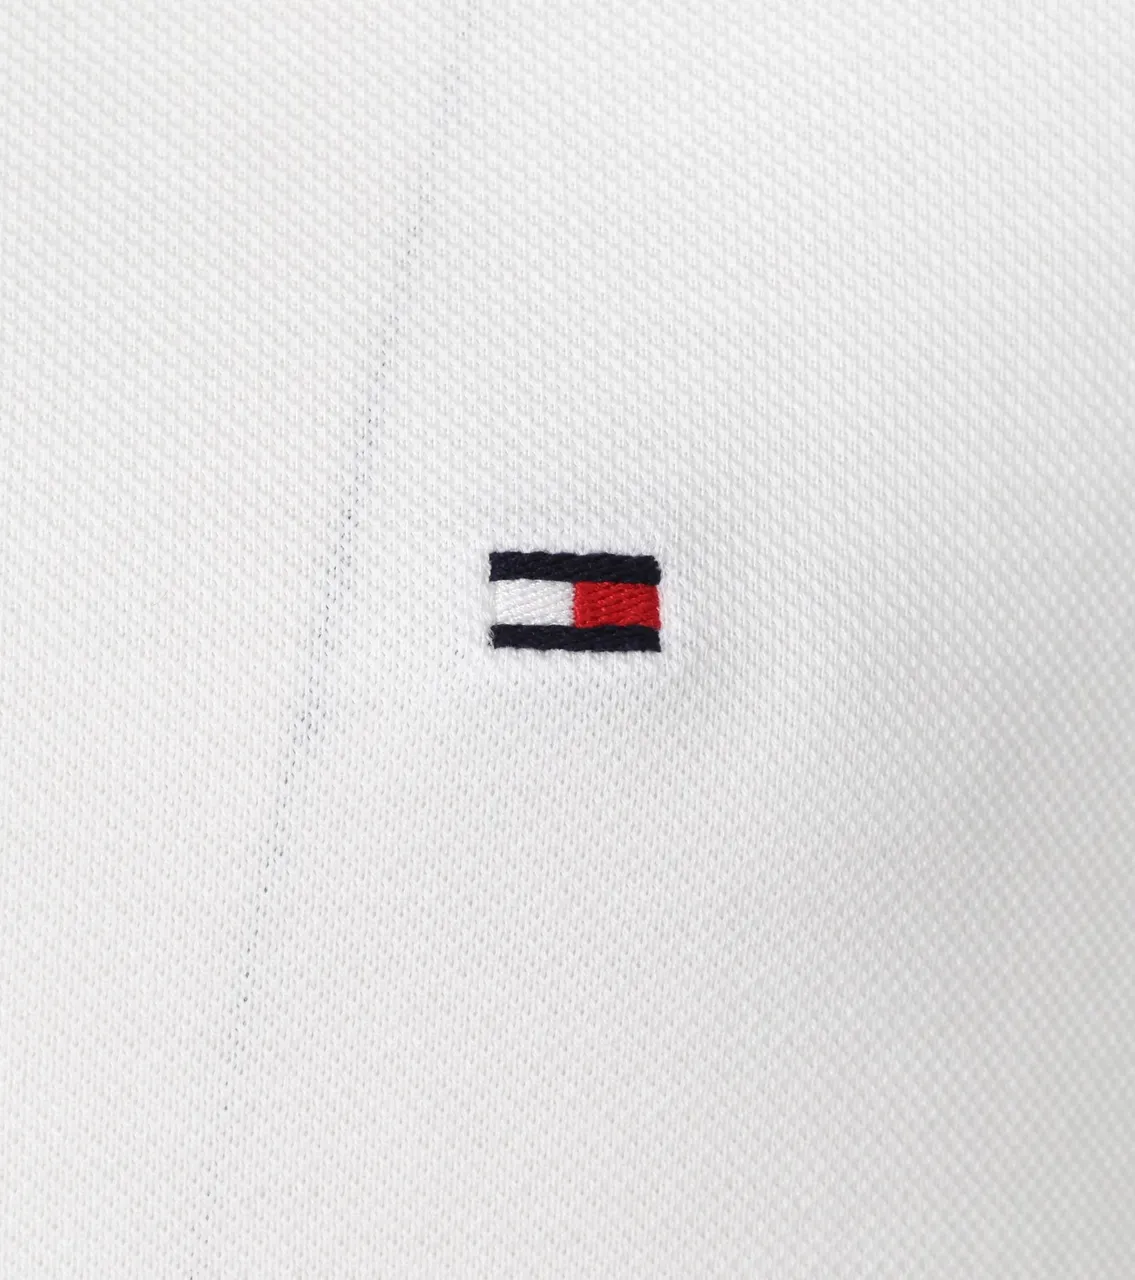 Tommy Hilfiger 1985 Polo Shirt White